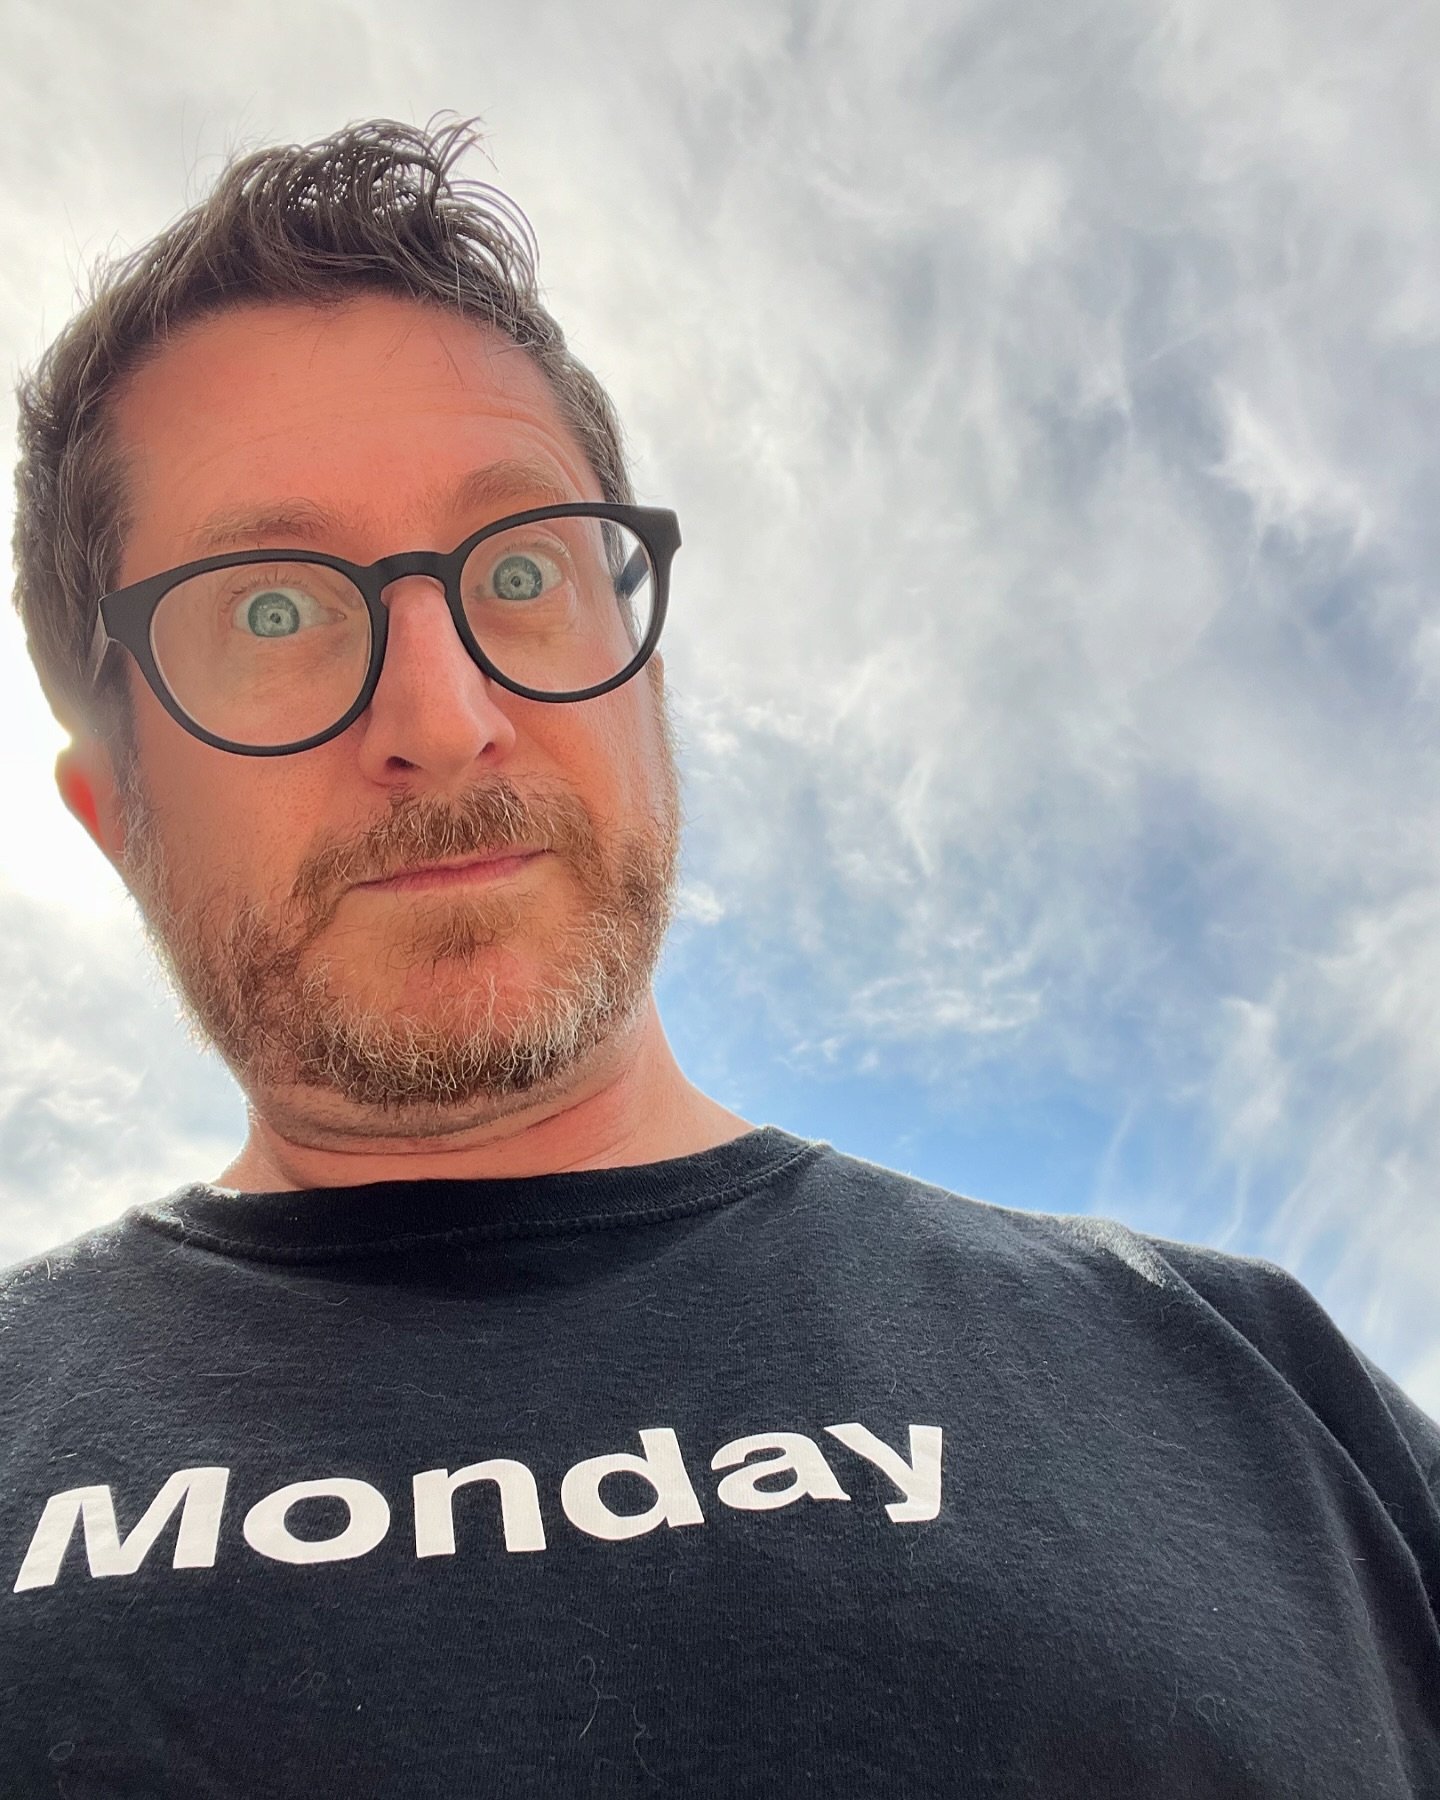 Today is Monday. Here I am in my Monday shirt. #art #davidgregharth #harth #monday #dayoftheweek #dotw